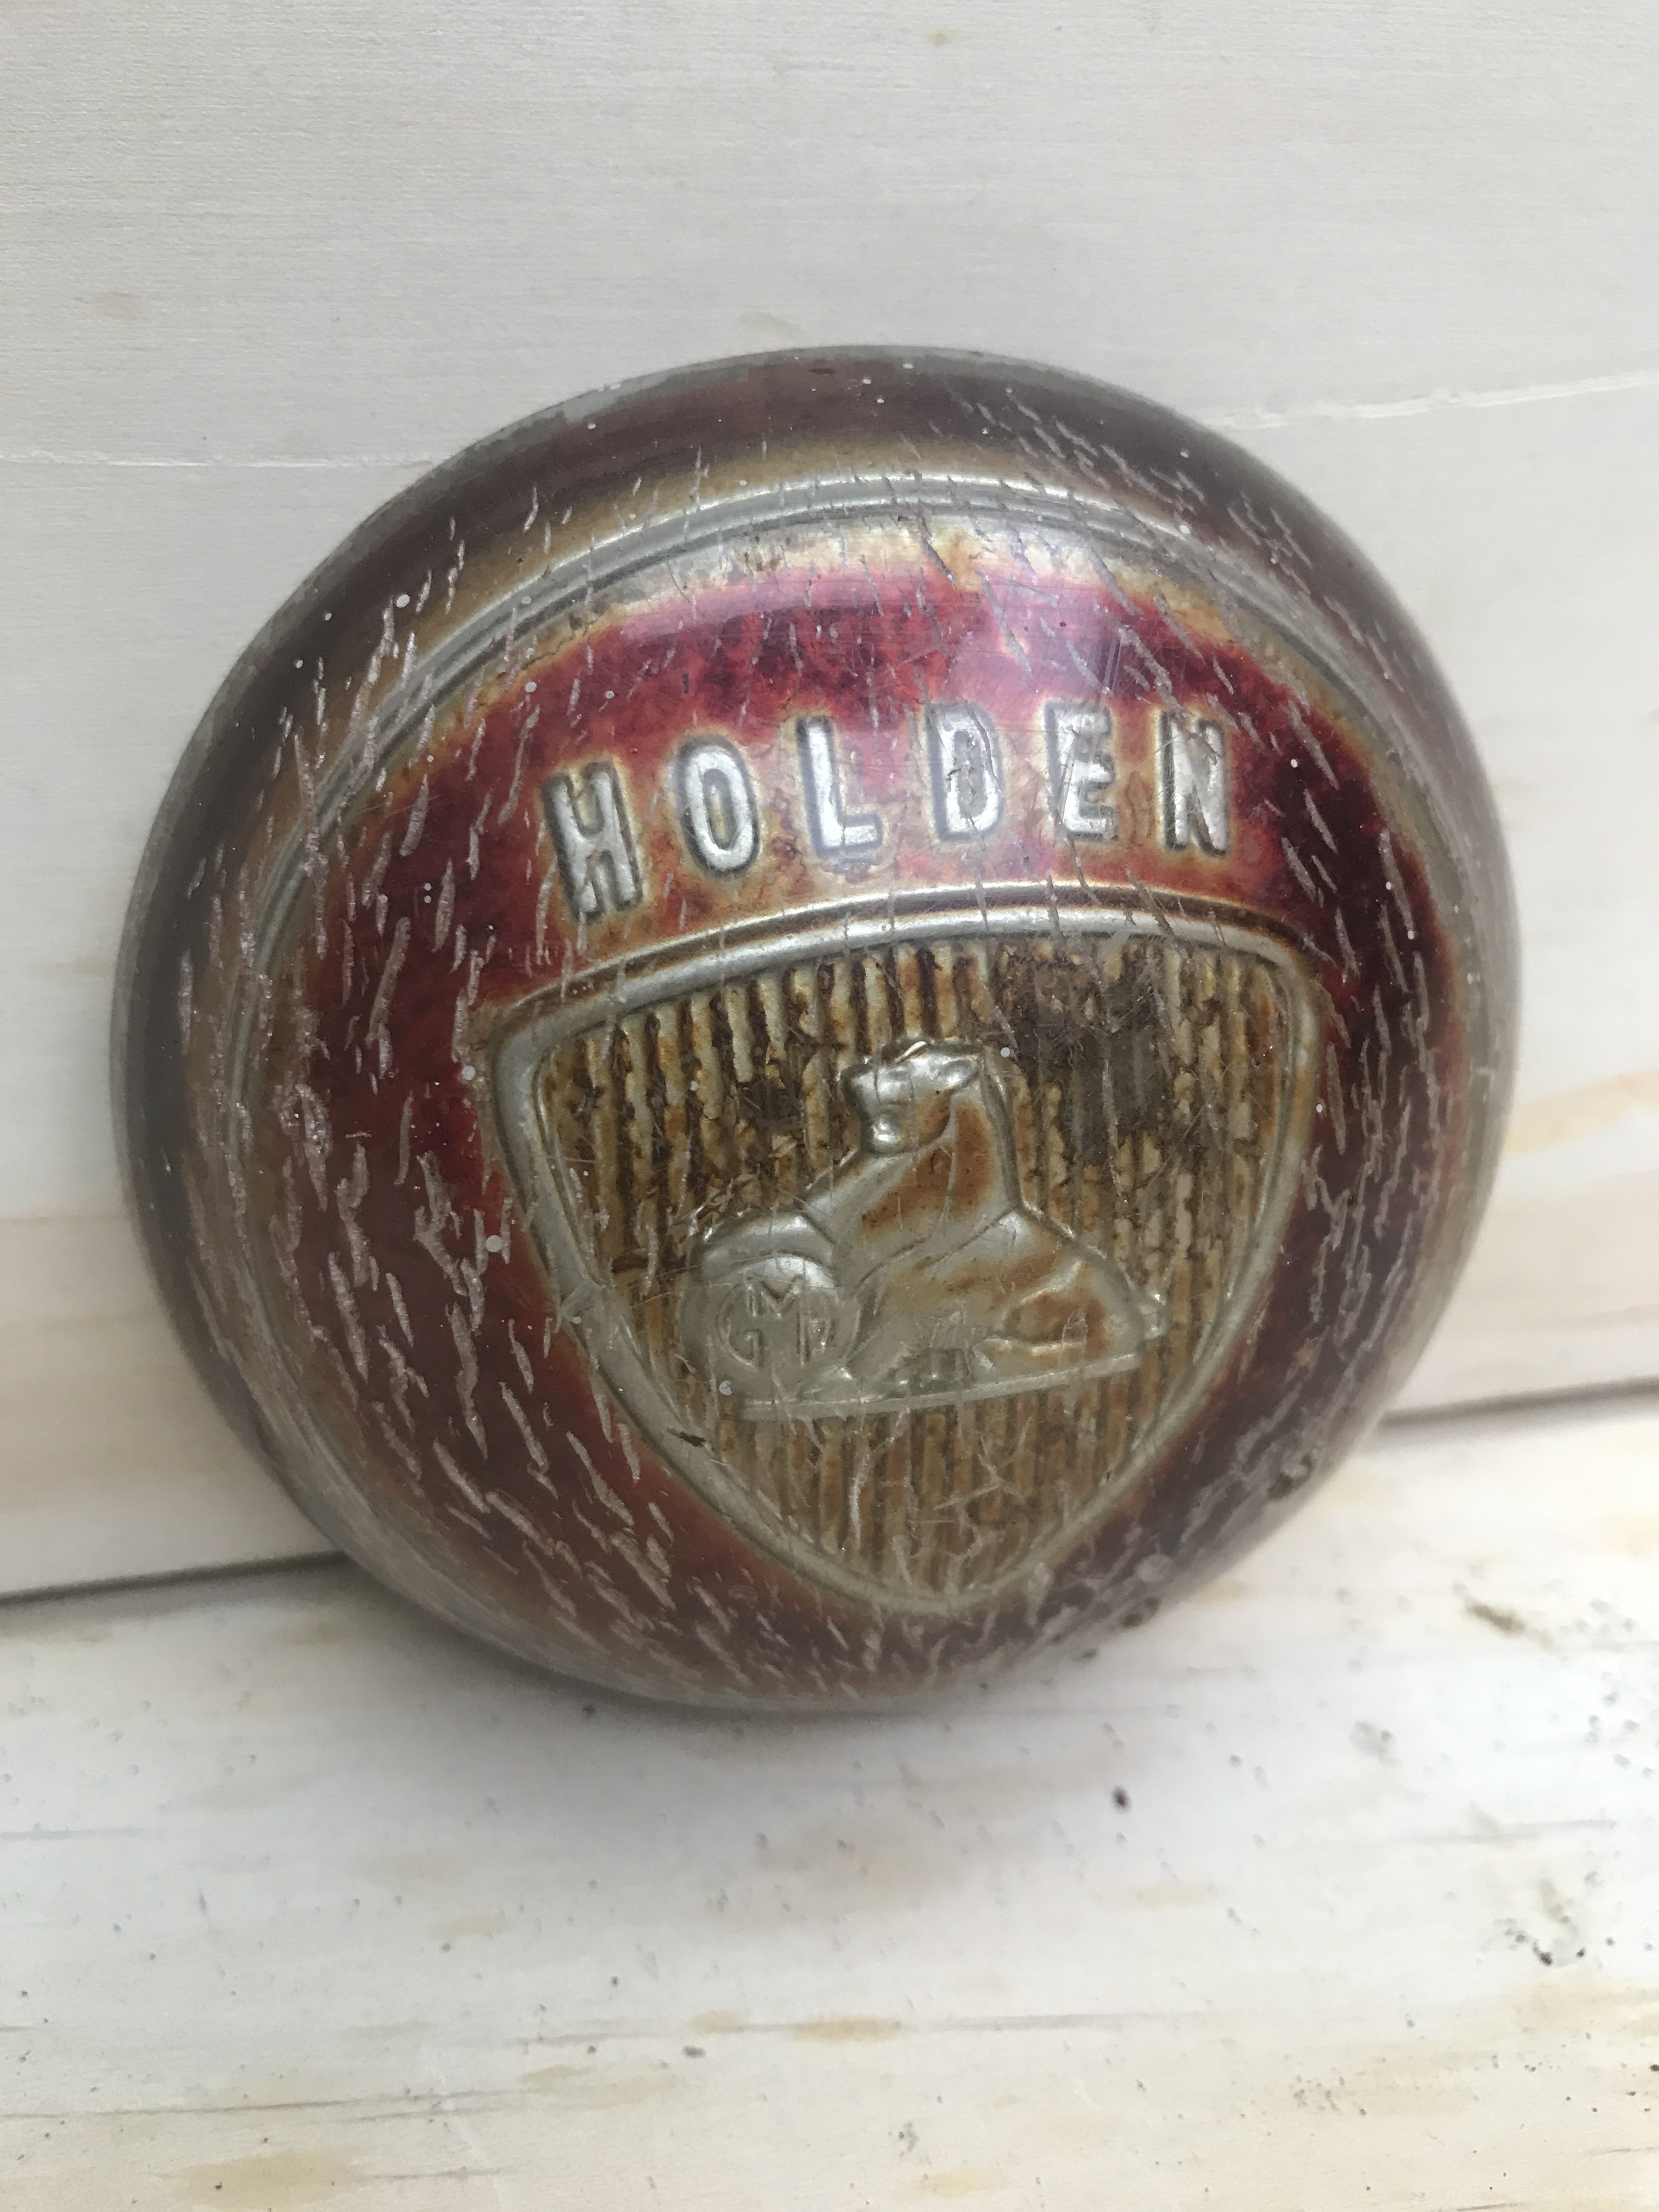 Used FC Holden horn cap